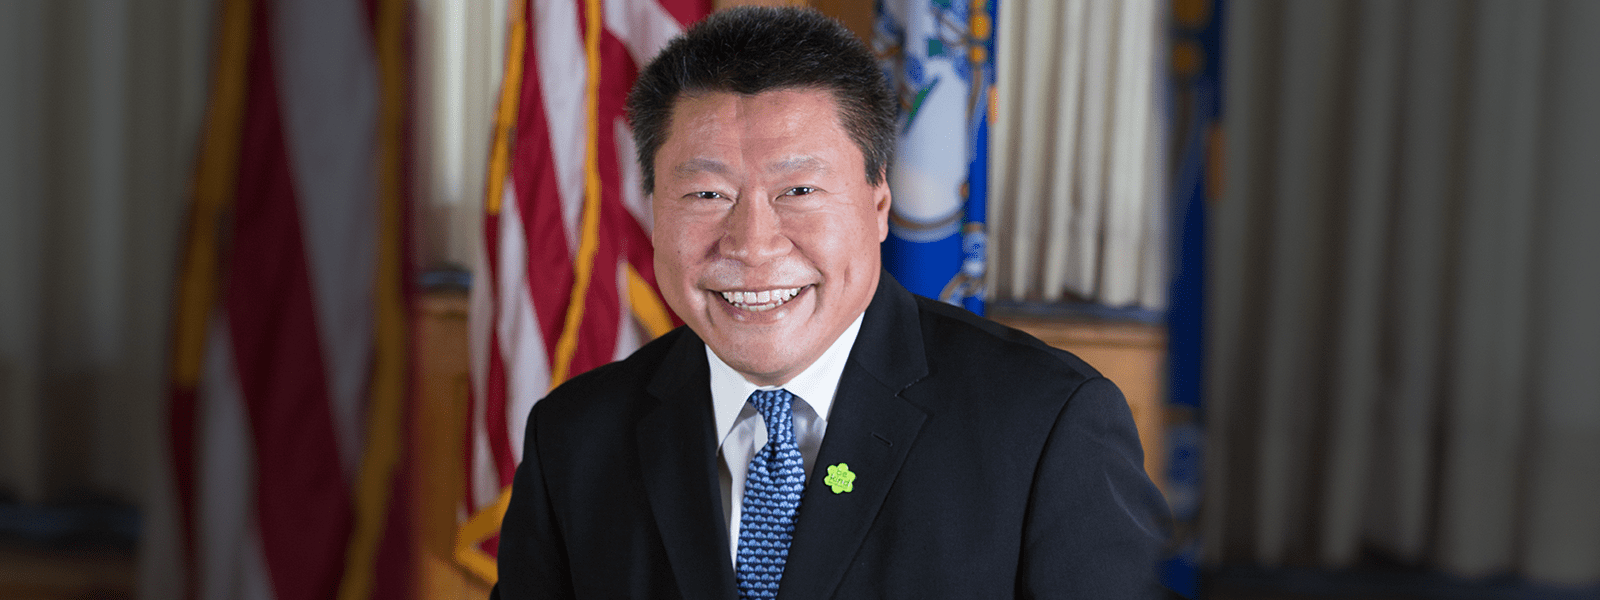 Senator Tony Hwang Named Deputy Connecticut Senate Republican Leader